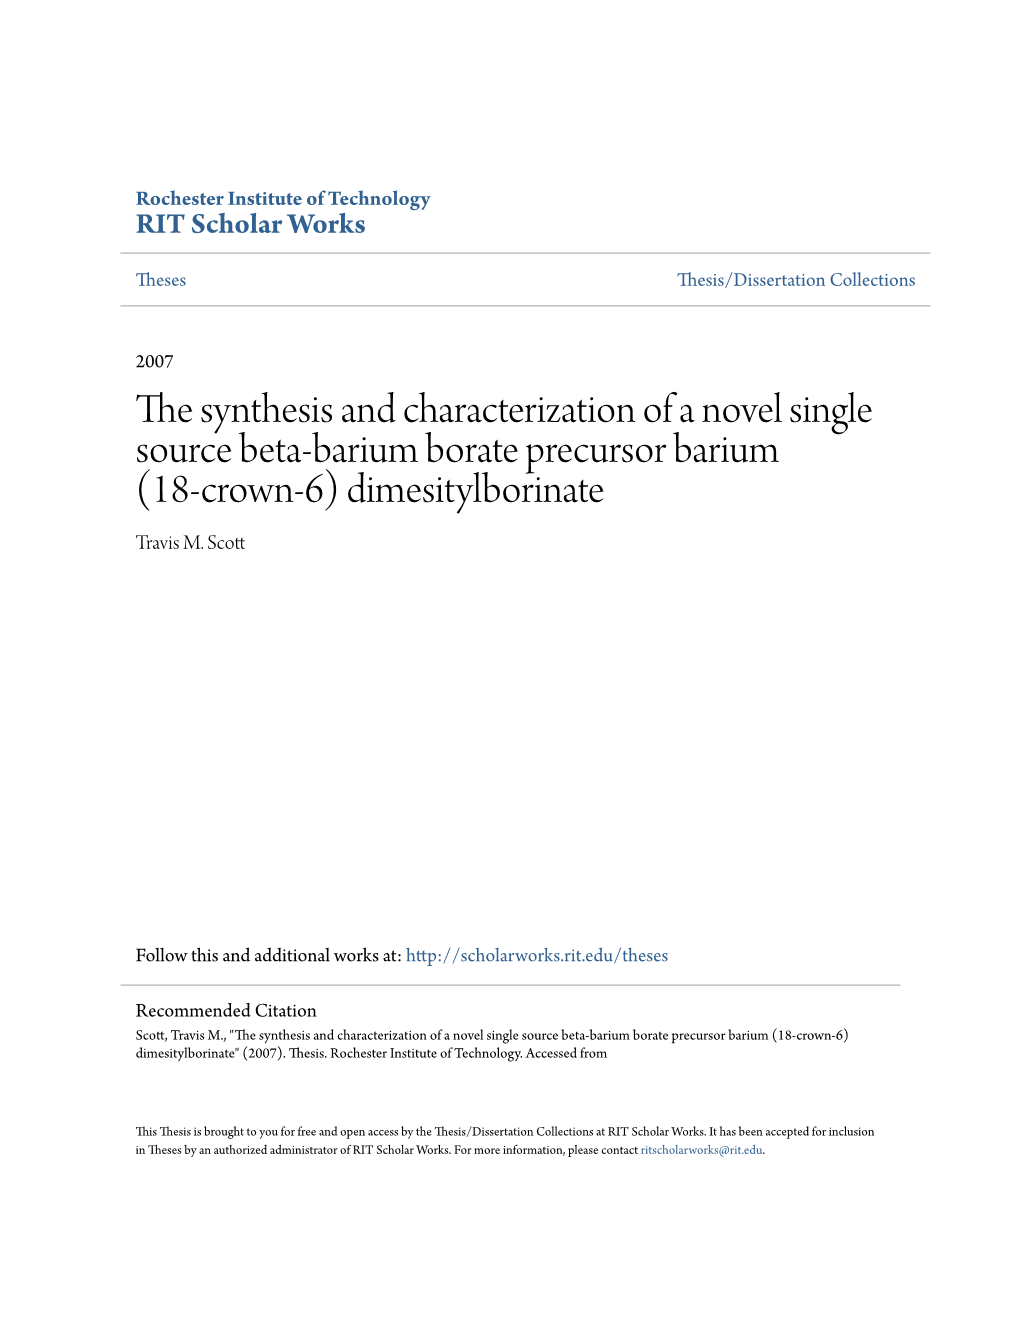 The Synthesis and Characterization of a Novel Single Source Beta-Barium Borate Precursor Barium (18-Crown-6) Dimesitylborinate Travis M